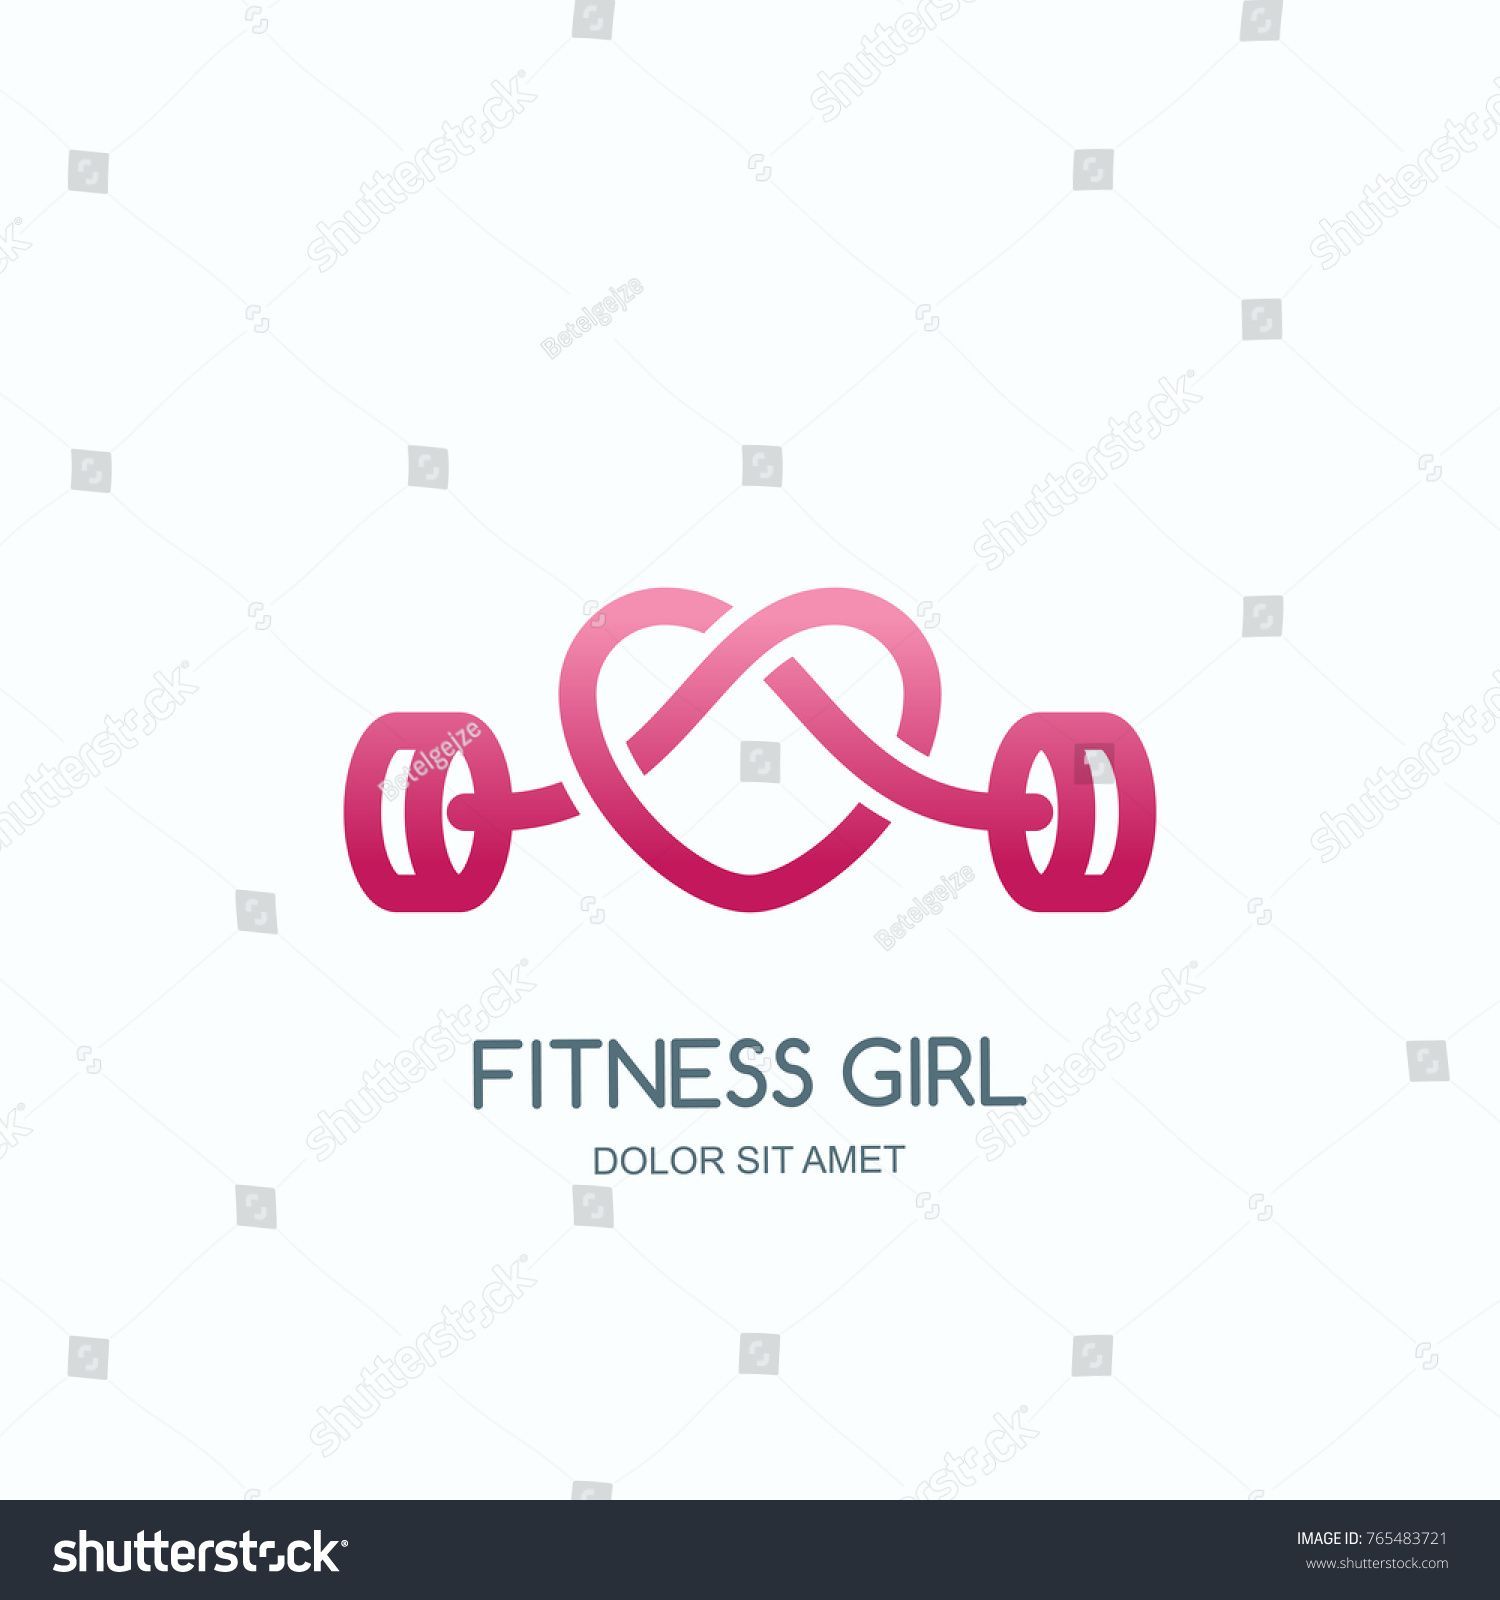 12 female fitness Logo ideas